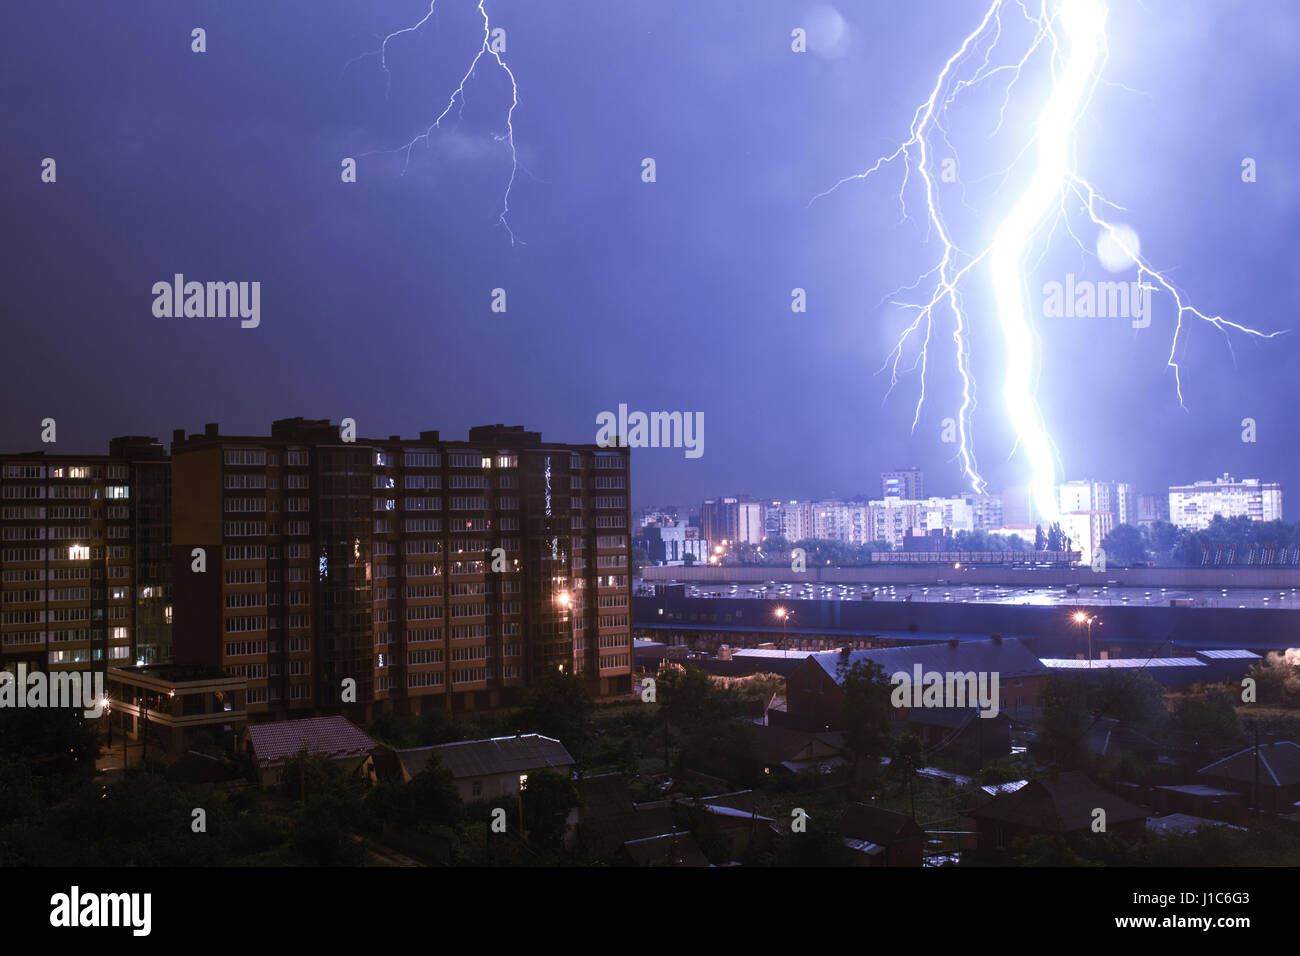 Lightning striking city at night Stock Photo